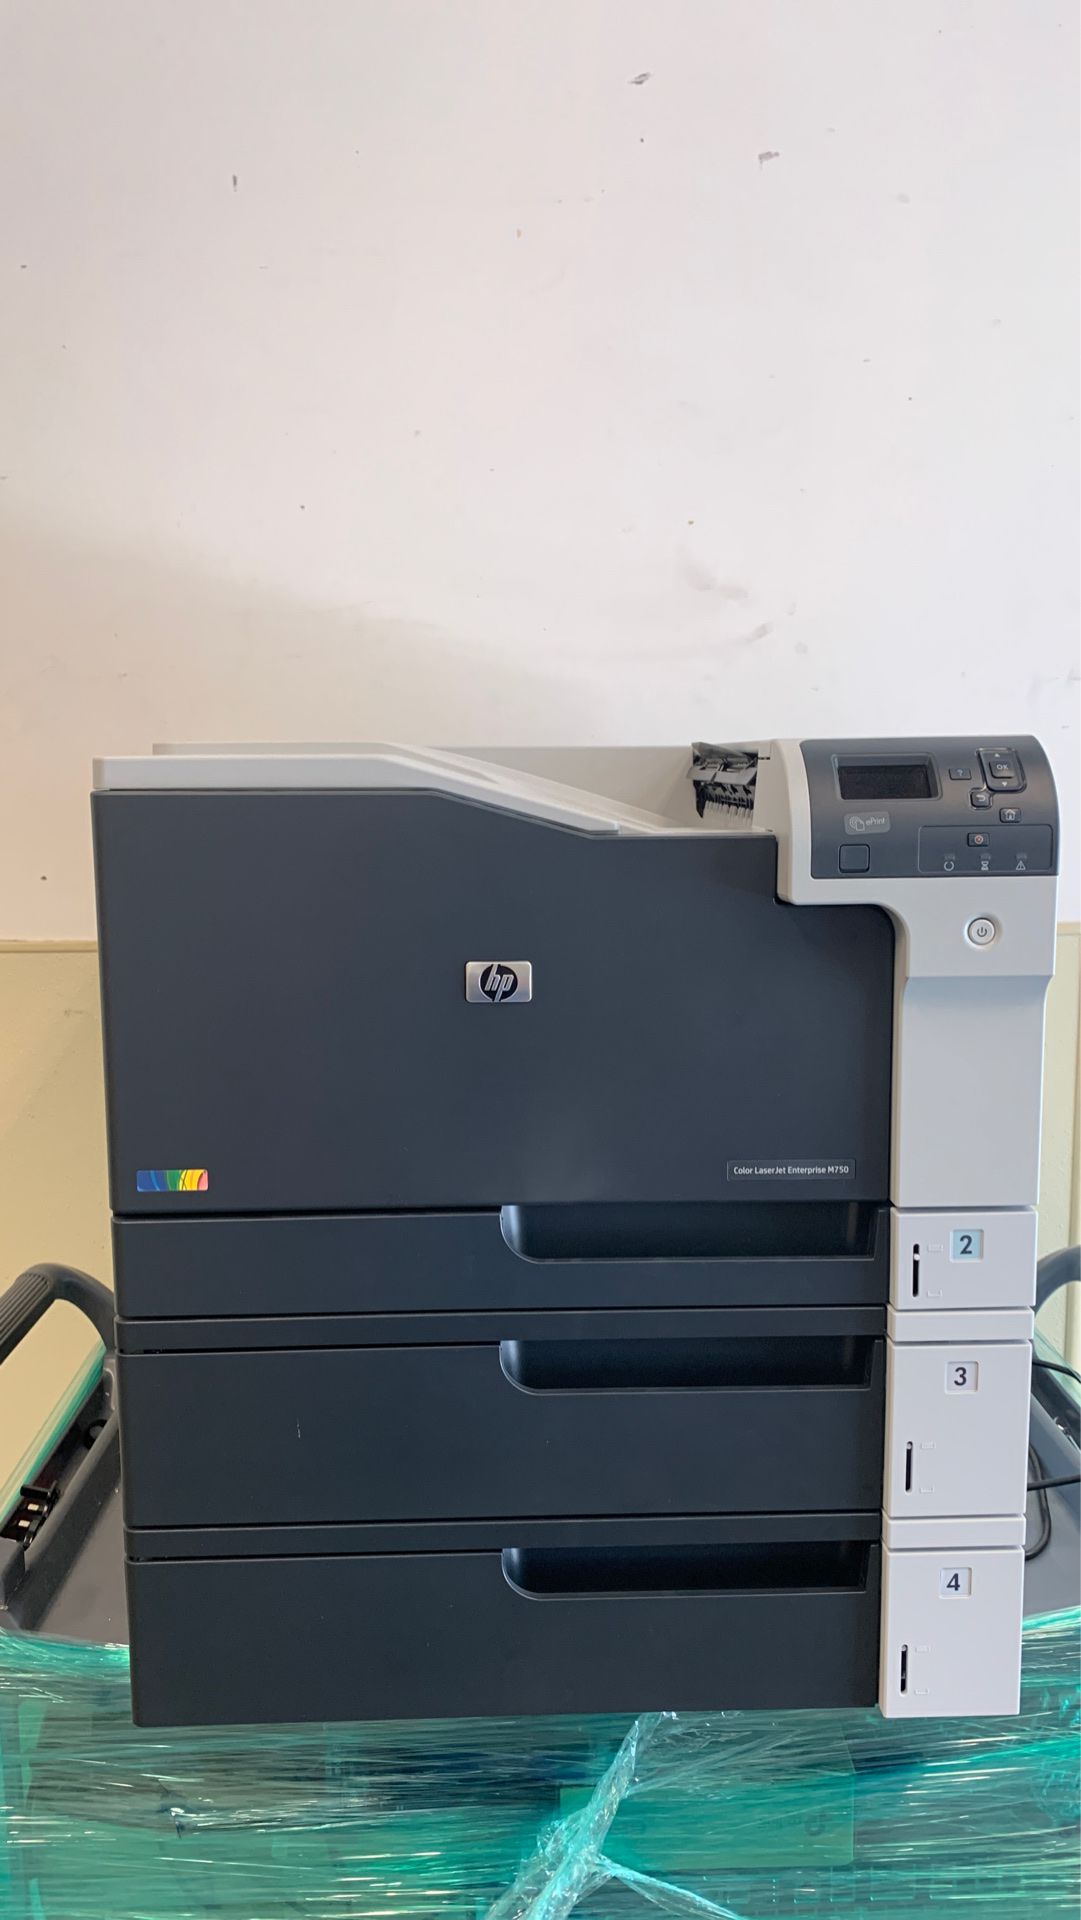 HP Color LaserJet Enterprice Printer Model M750 w 4 trays